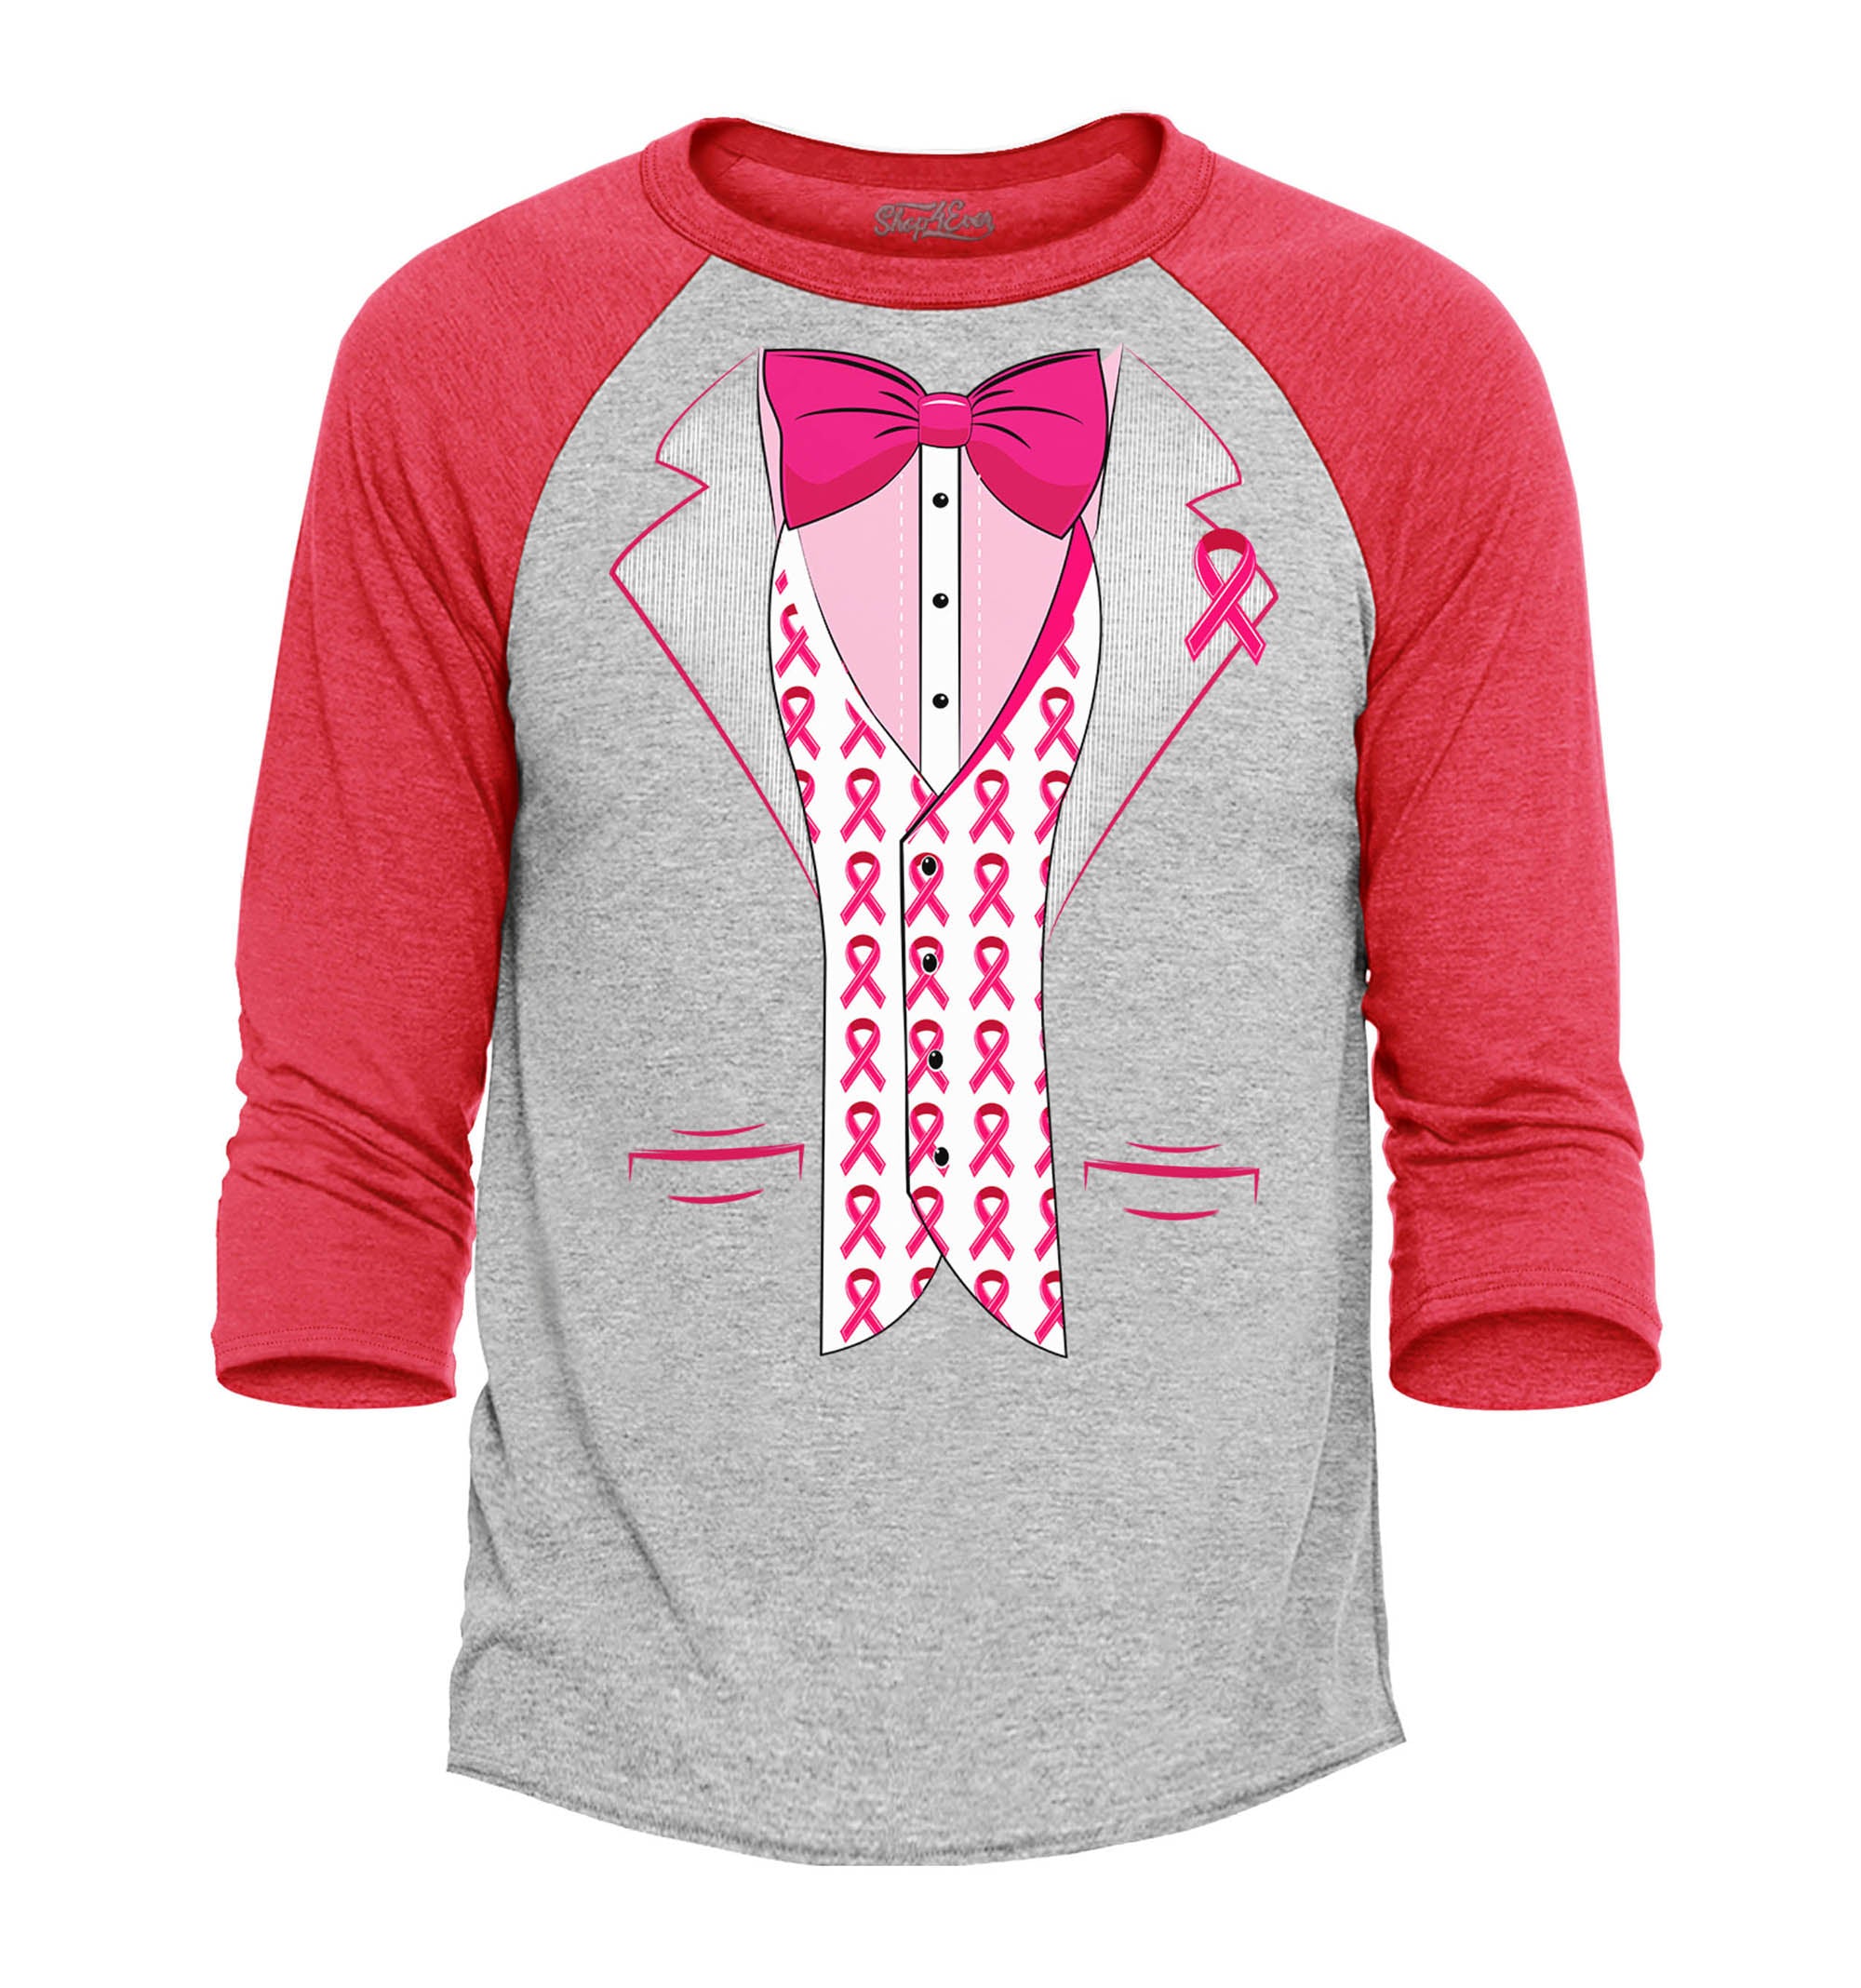 Breast Cancer Tuxedo Baseball Shirt Support Awareness Raglan Tee Shirts